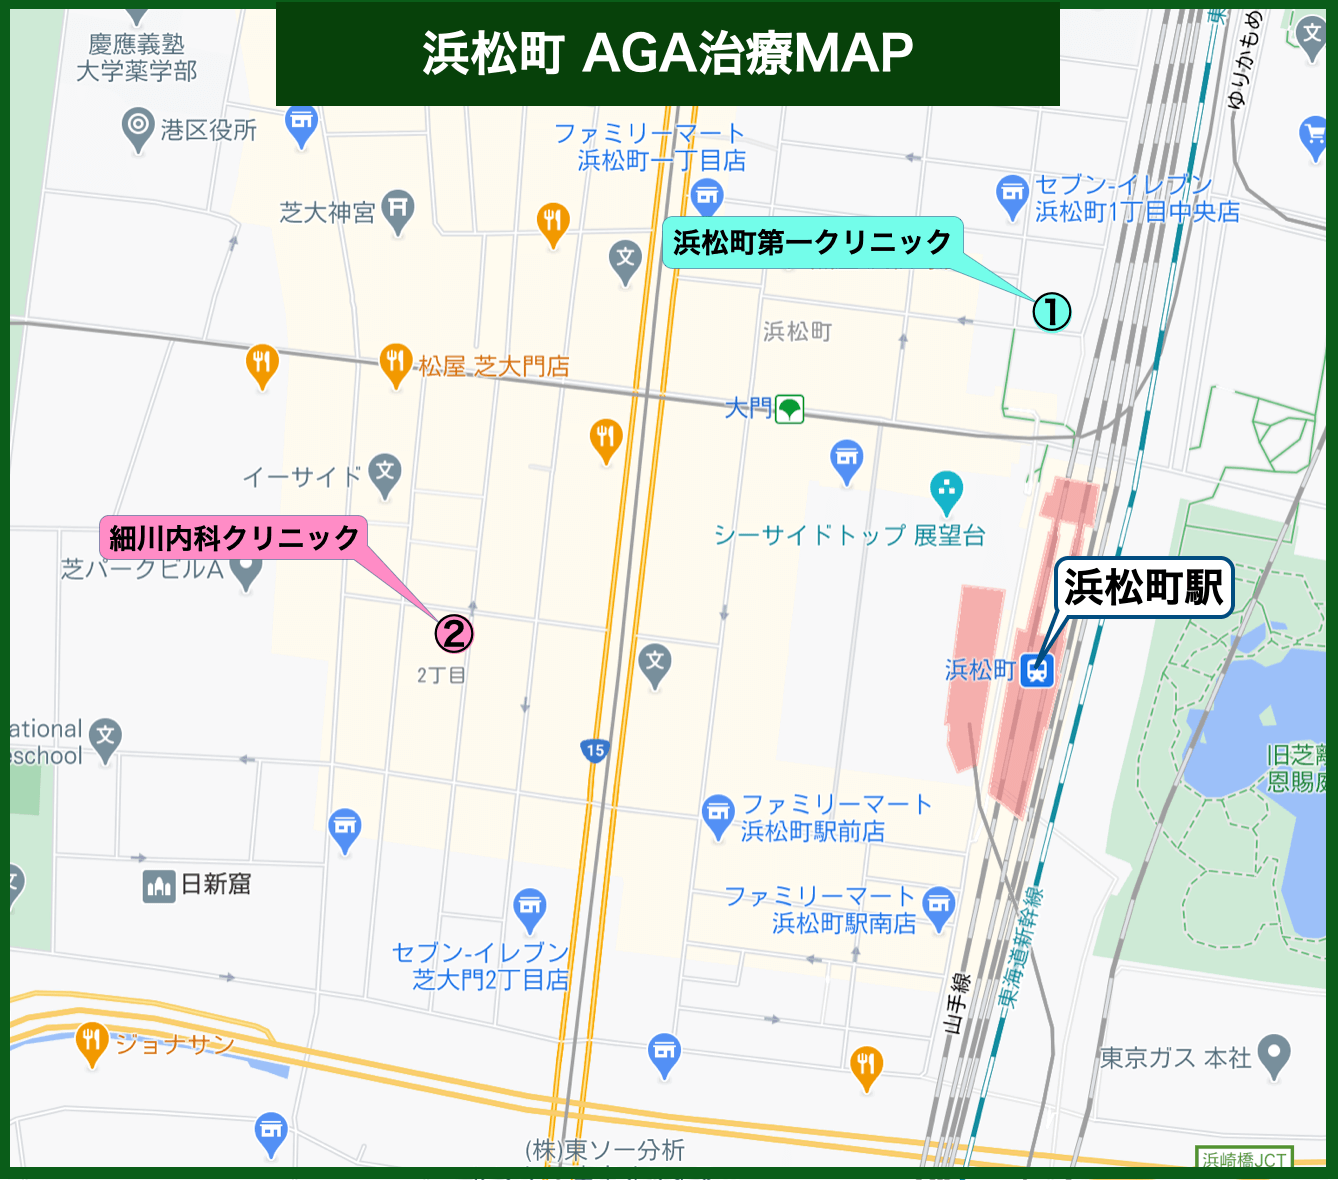 浜松町 AGA治療MAP